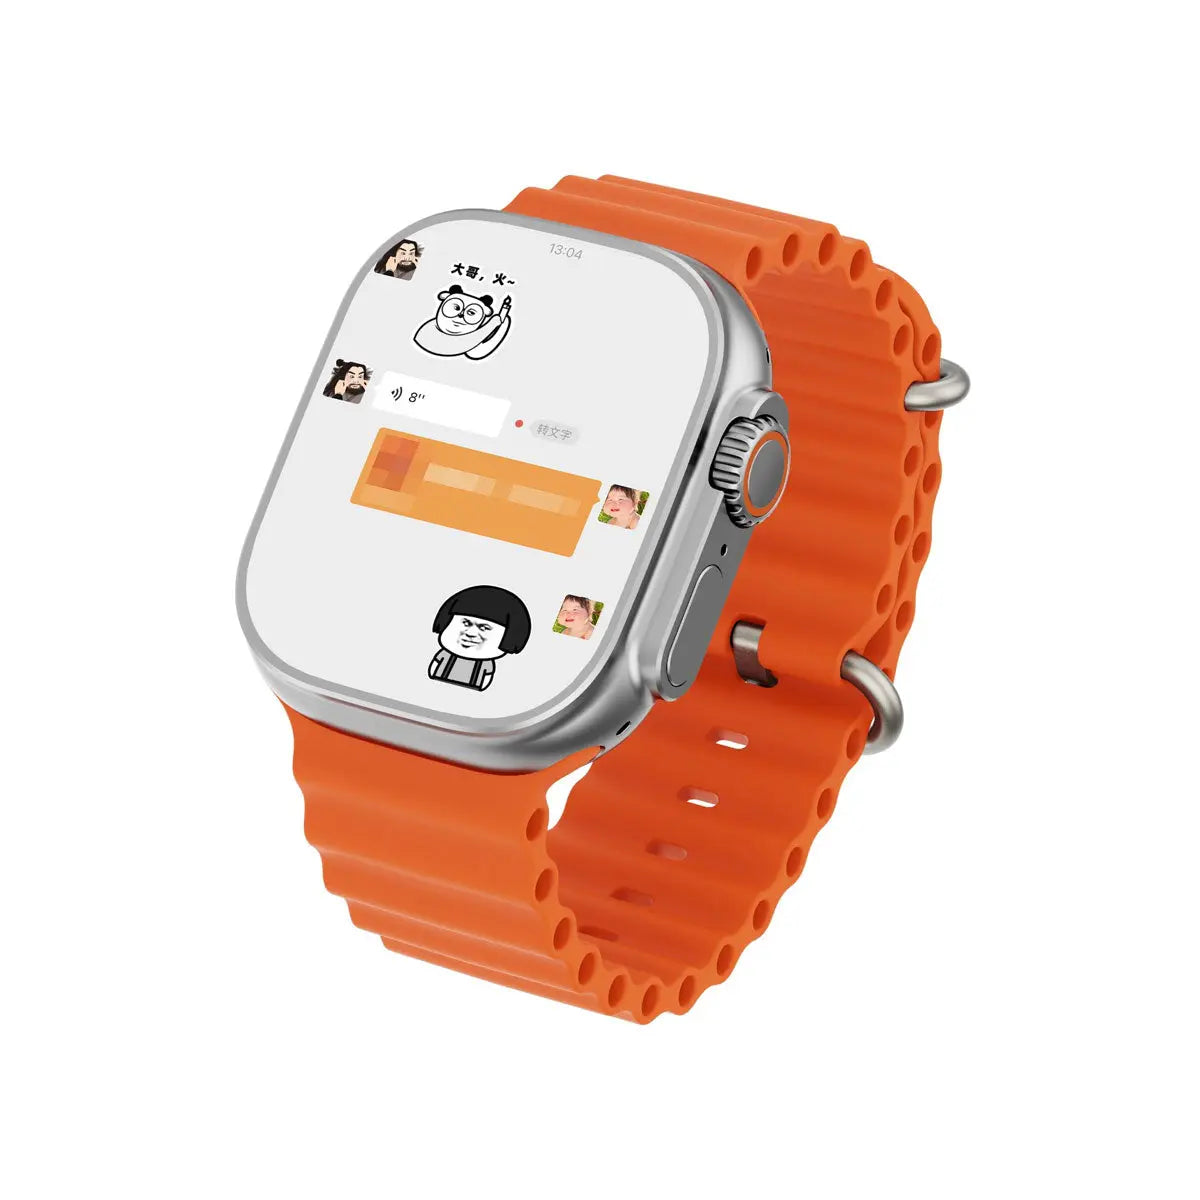 Reloj Smartwatch Fralugio CDS9 Android 8.1, 4GB RAM, 64GB ROM - Fralugio